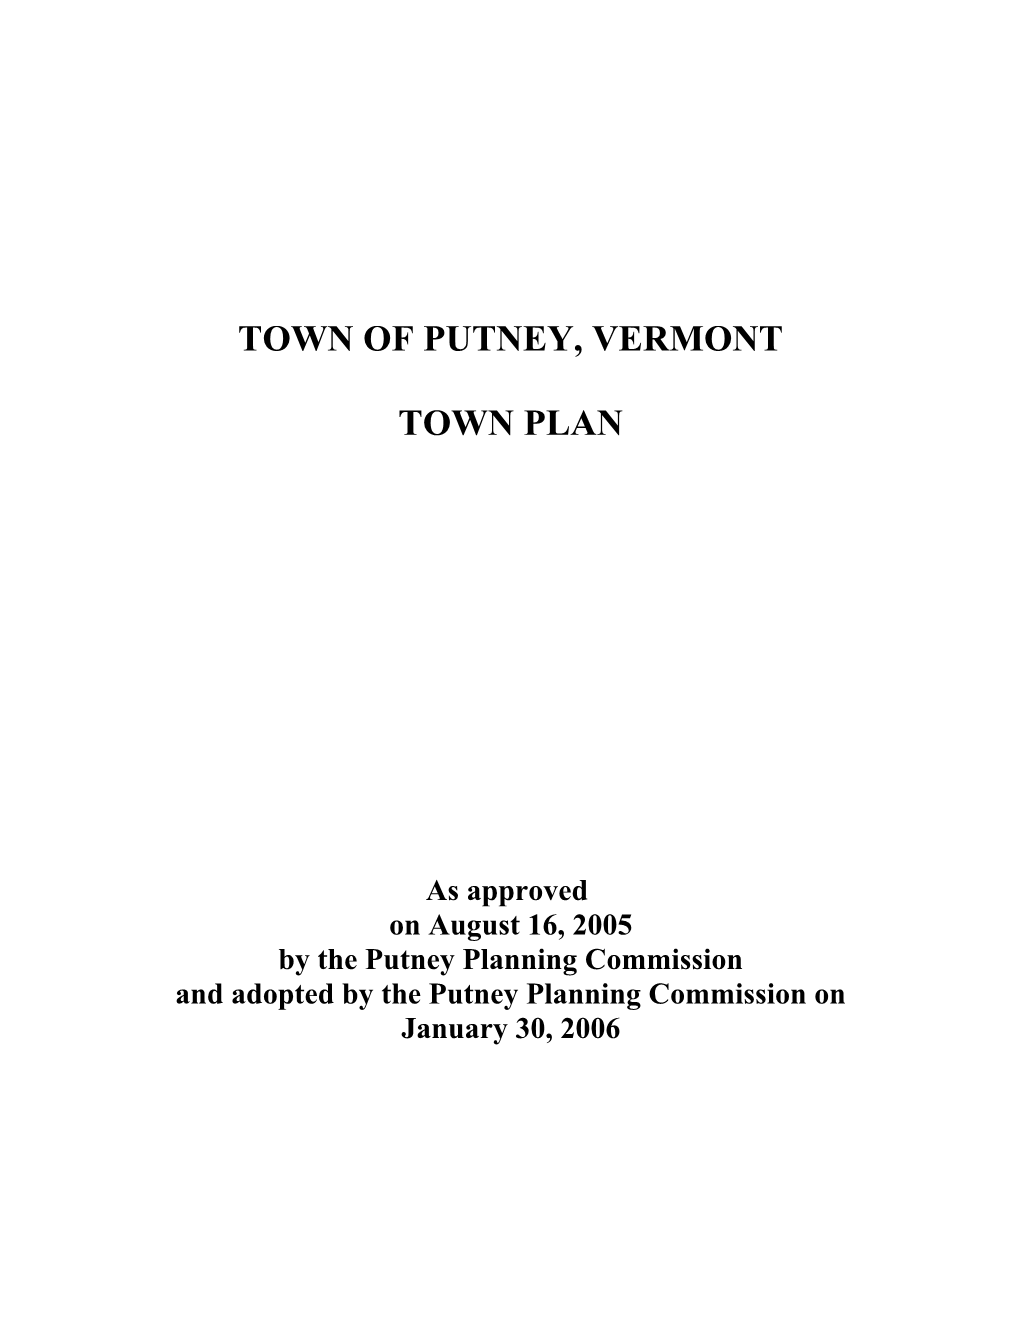 Town of Putney, Vermont s1